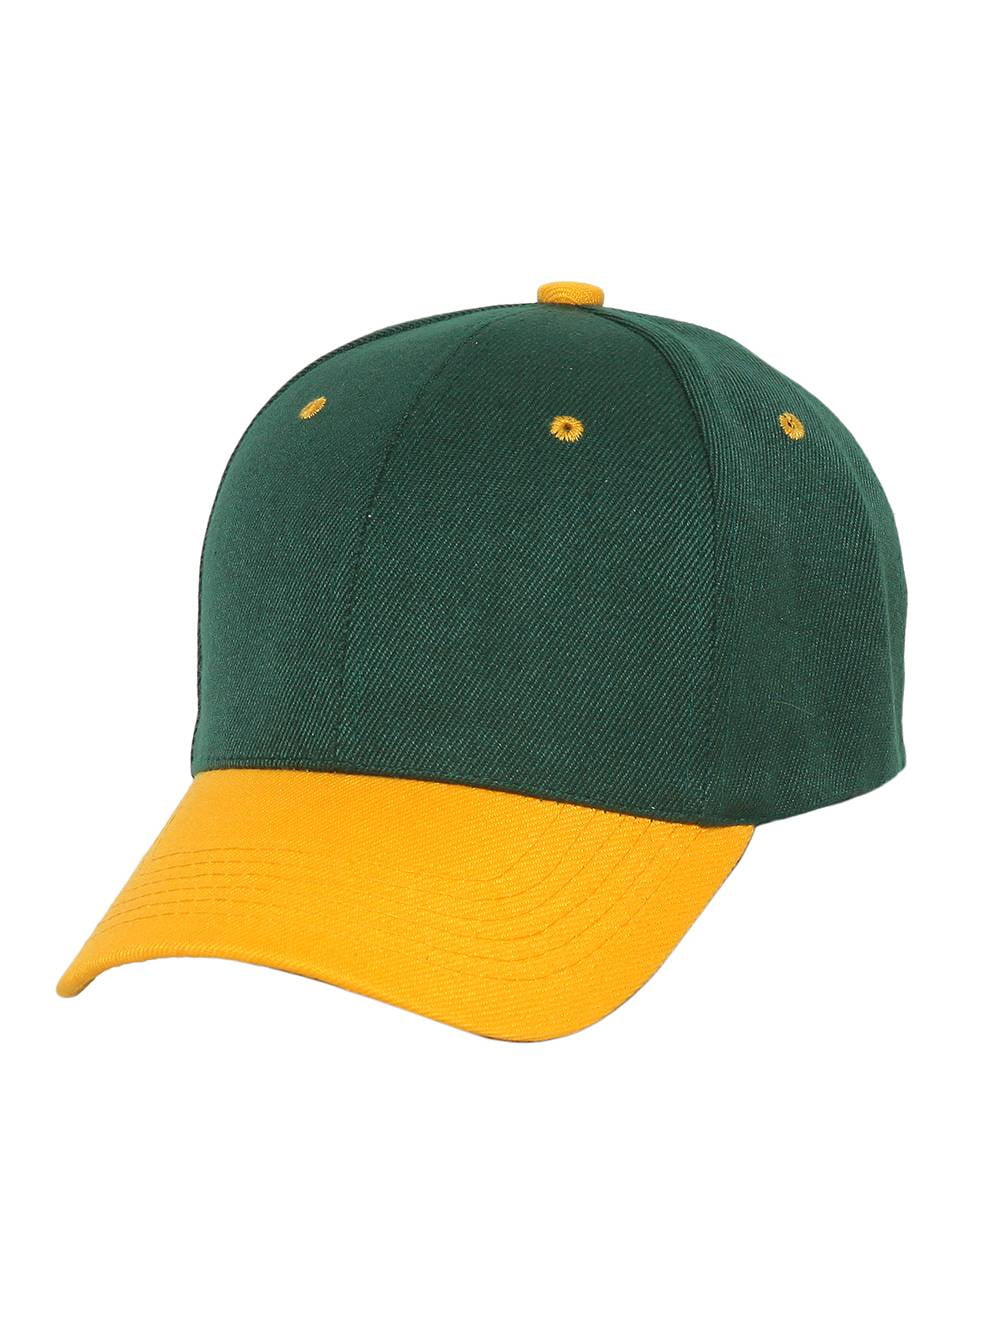 Two-Tone Adjustable Yellow Baseball Cap, Green